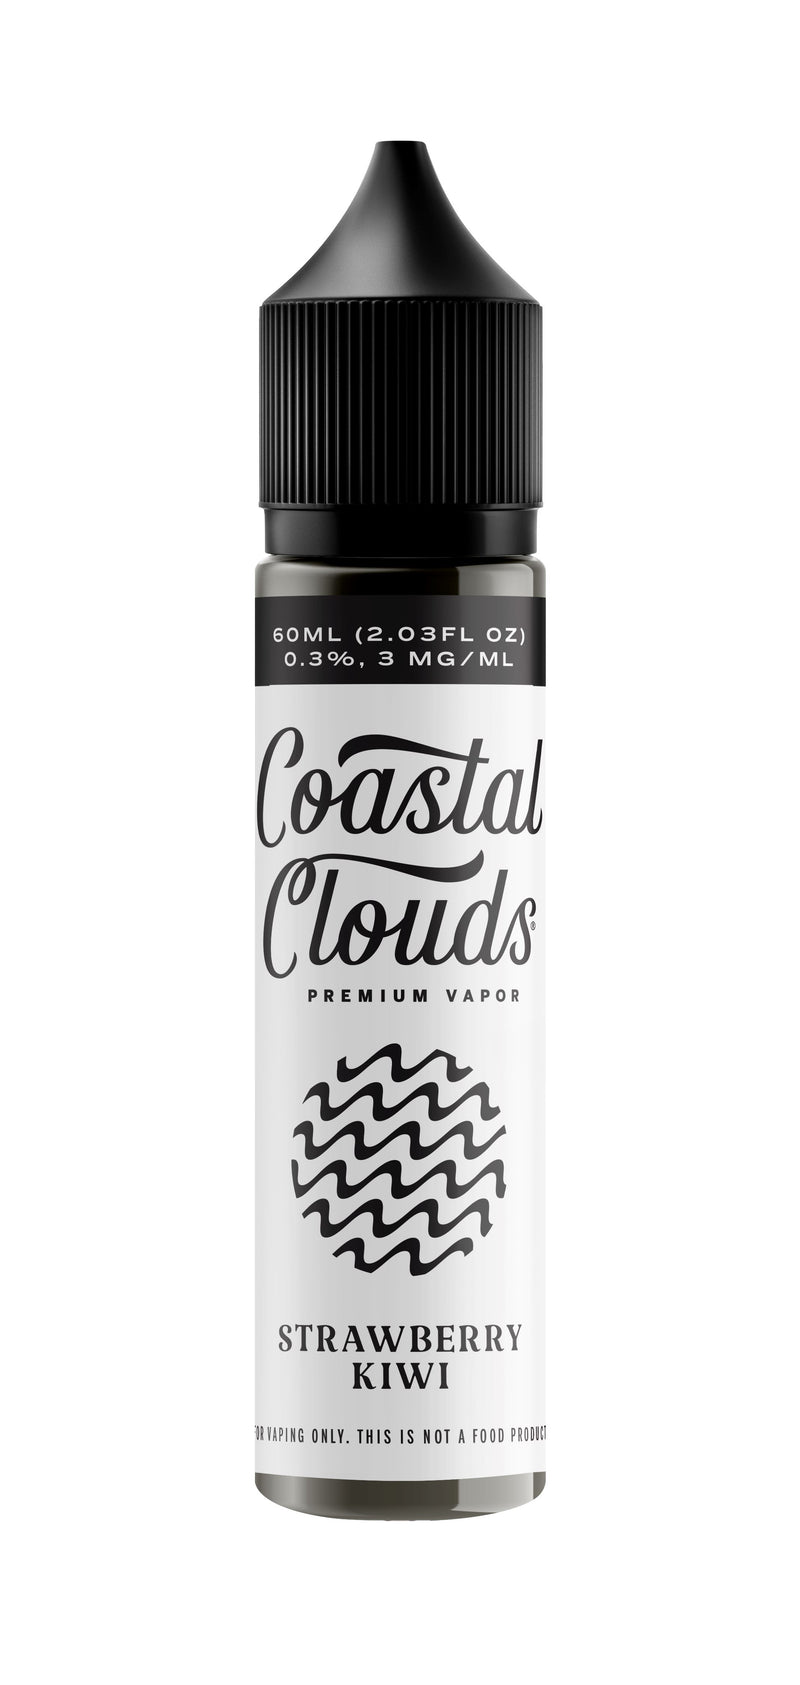 Strawberry Kiwi by Coastal Clouds TFN 60ml bottle